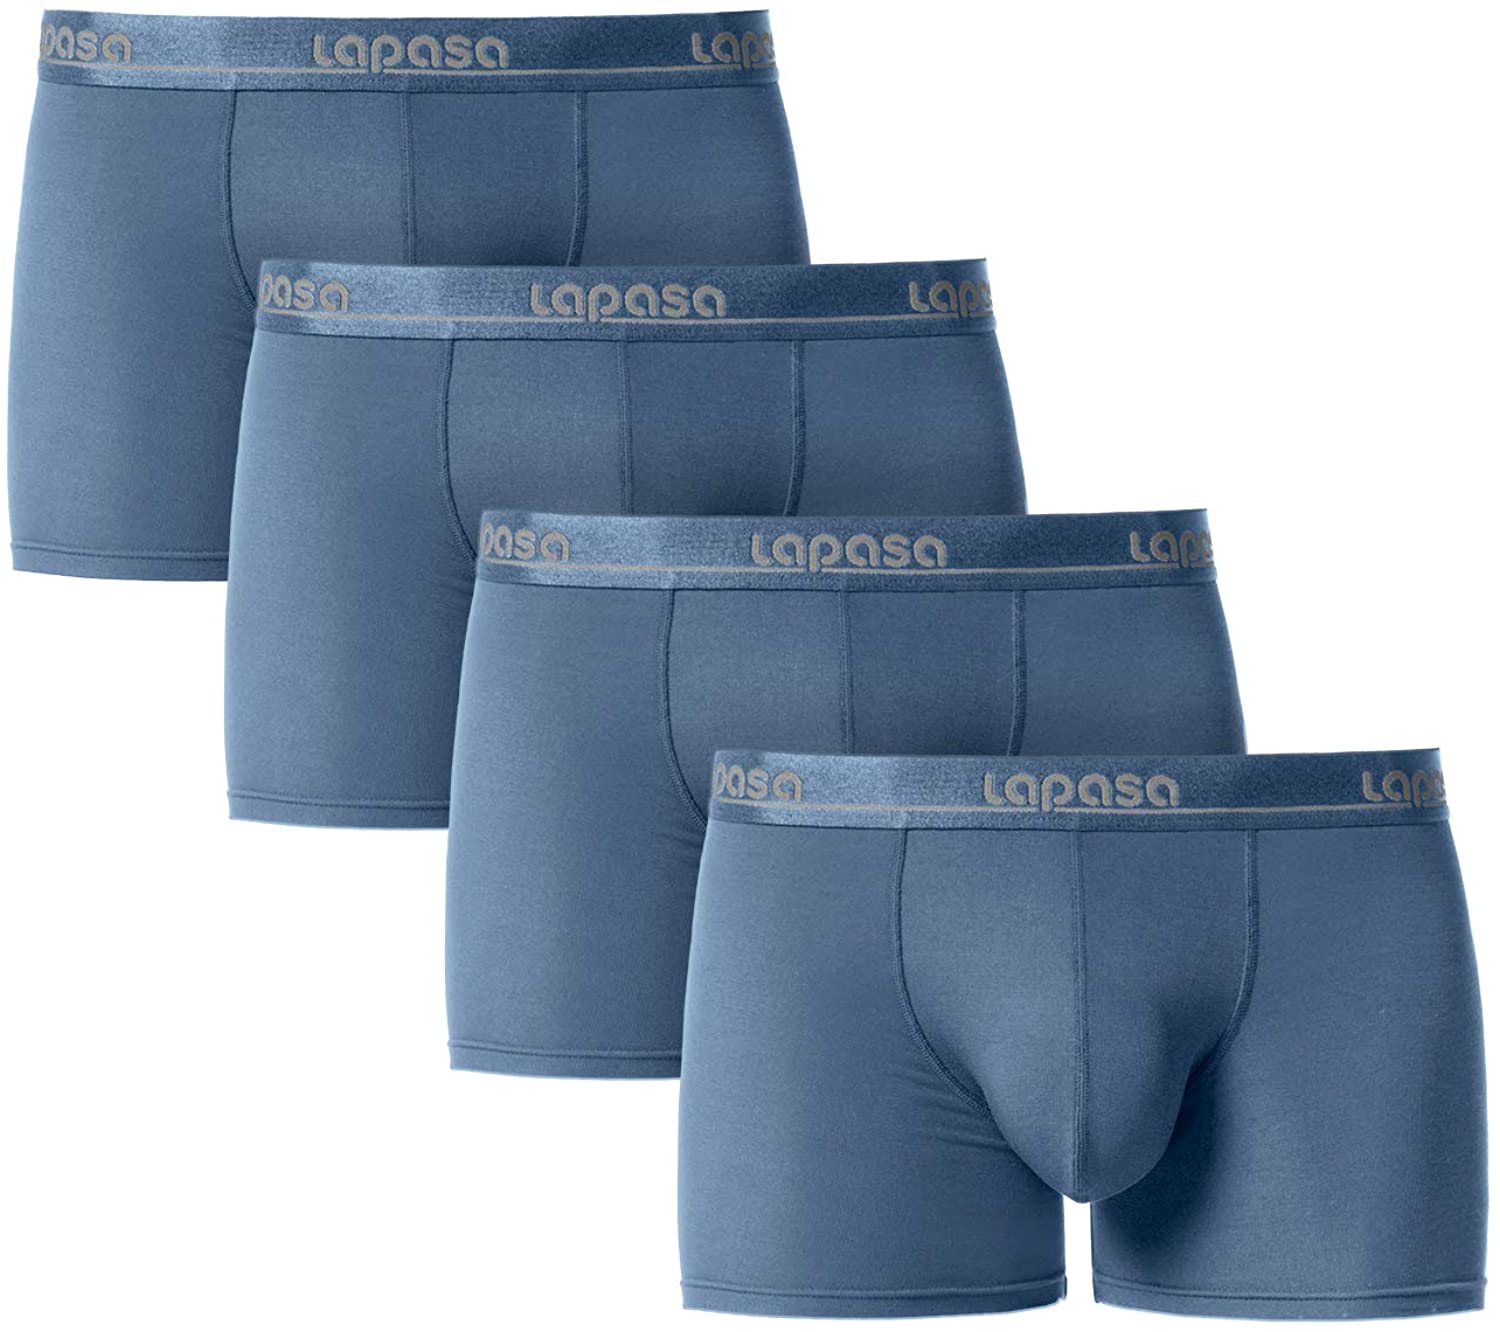 Lapasa M03NEW Boxer Shorts, Underwear Set, Set of 4, Nepal